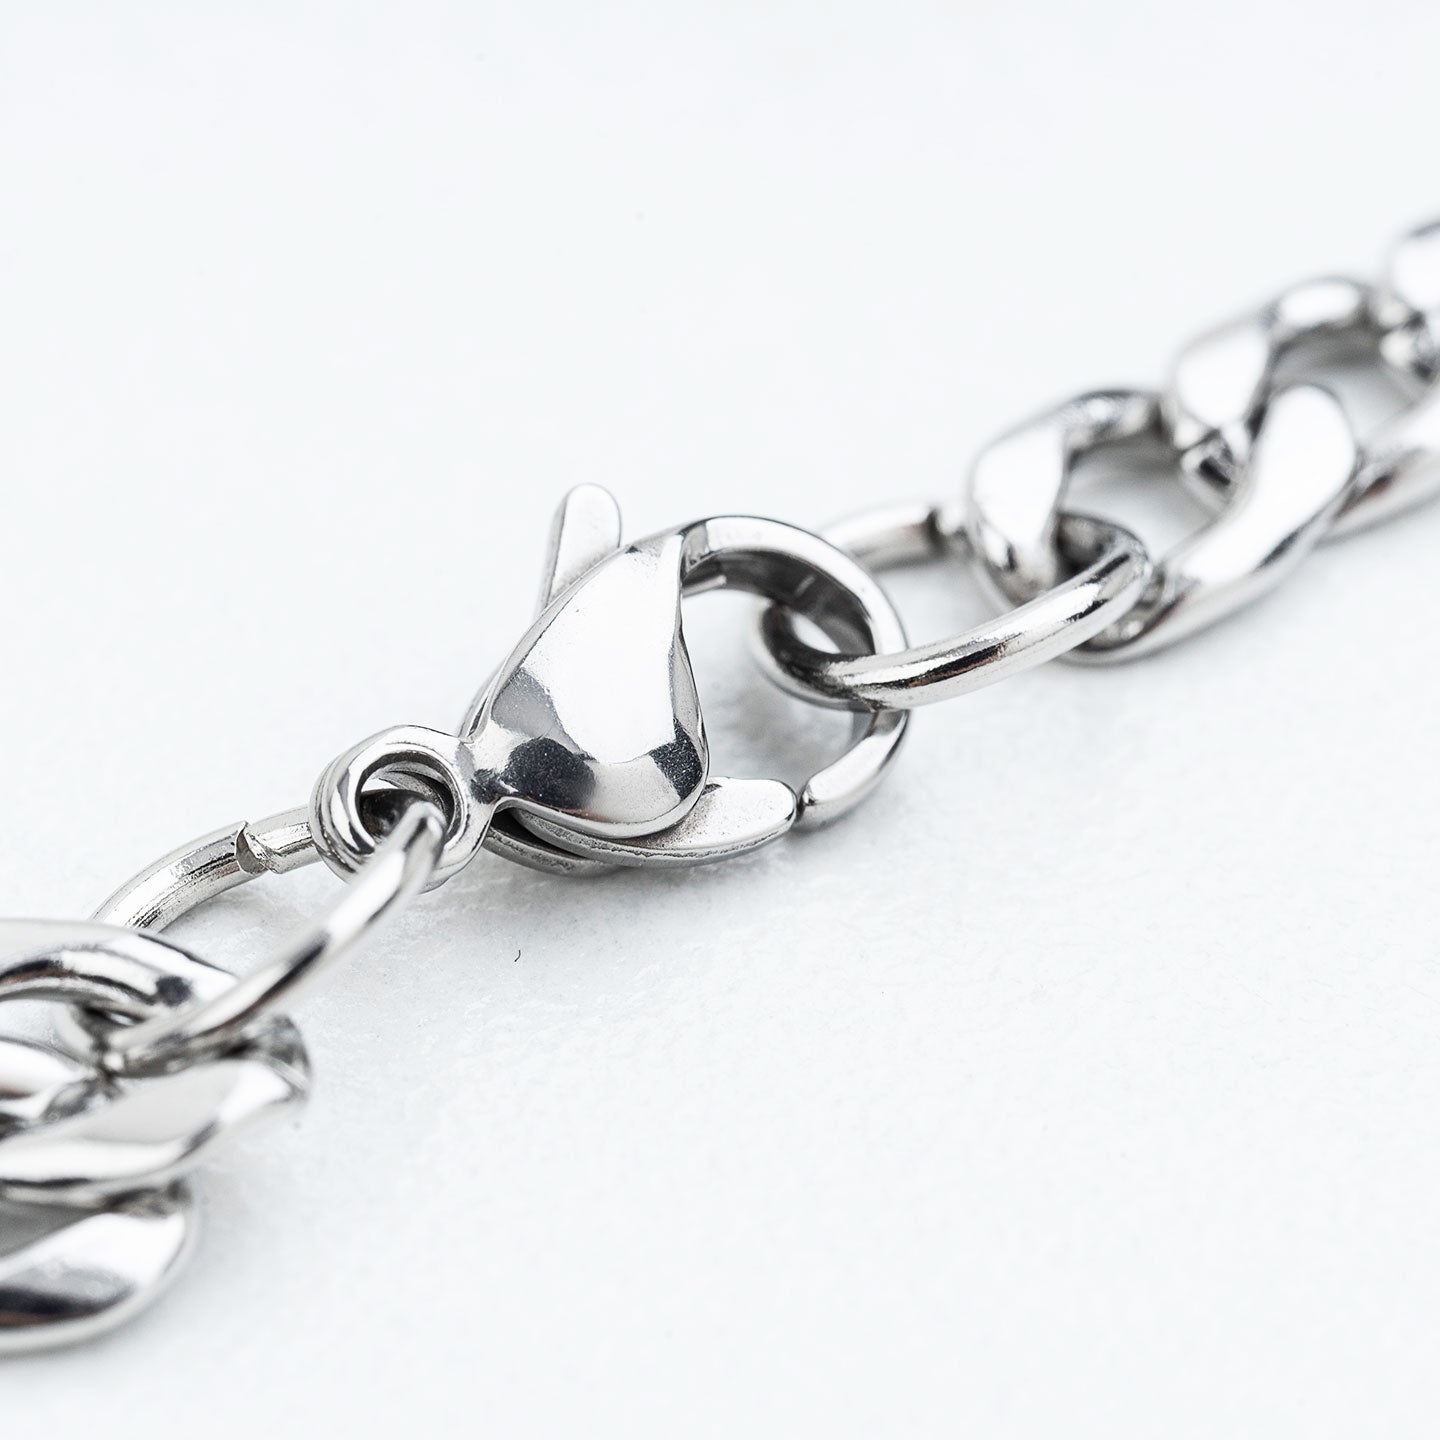 Duo Hybrid Pendant Necklace - Silver